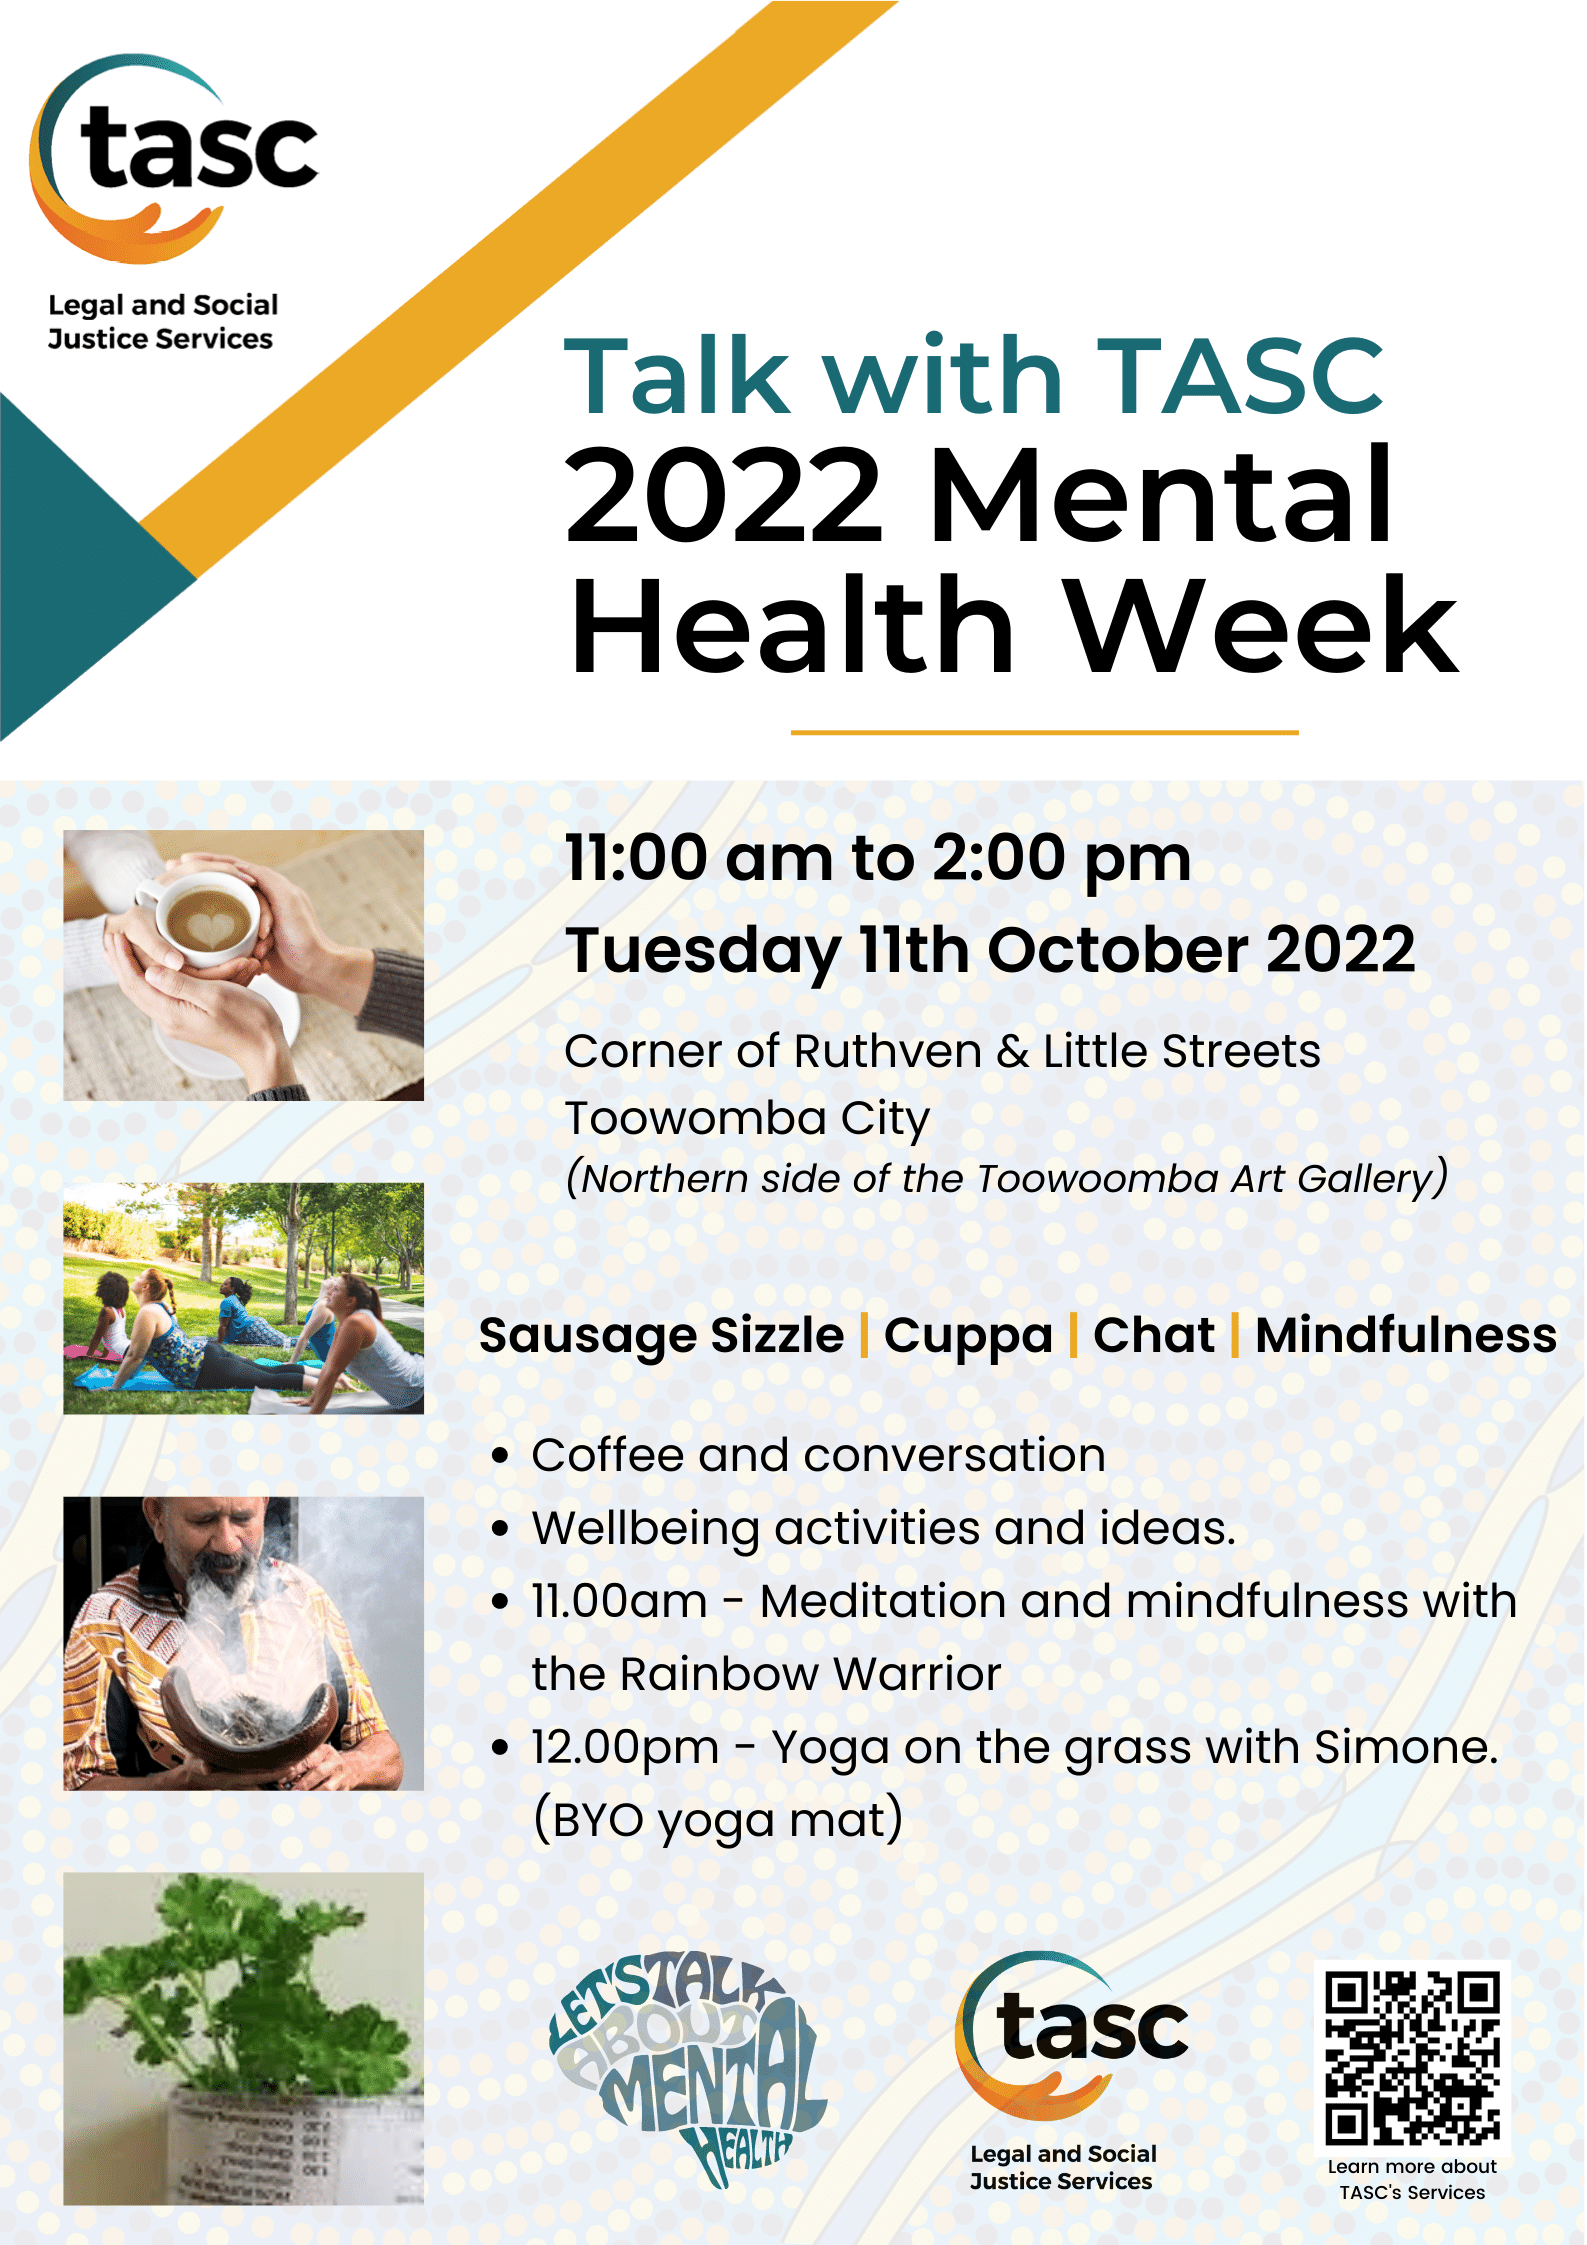 Talk with TASC during Mental Health Week